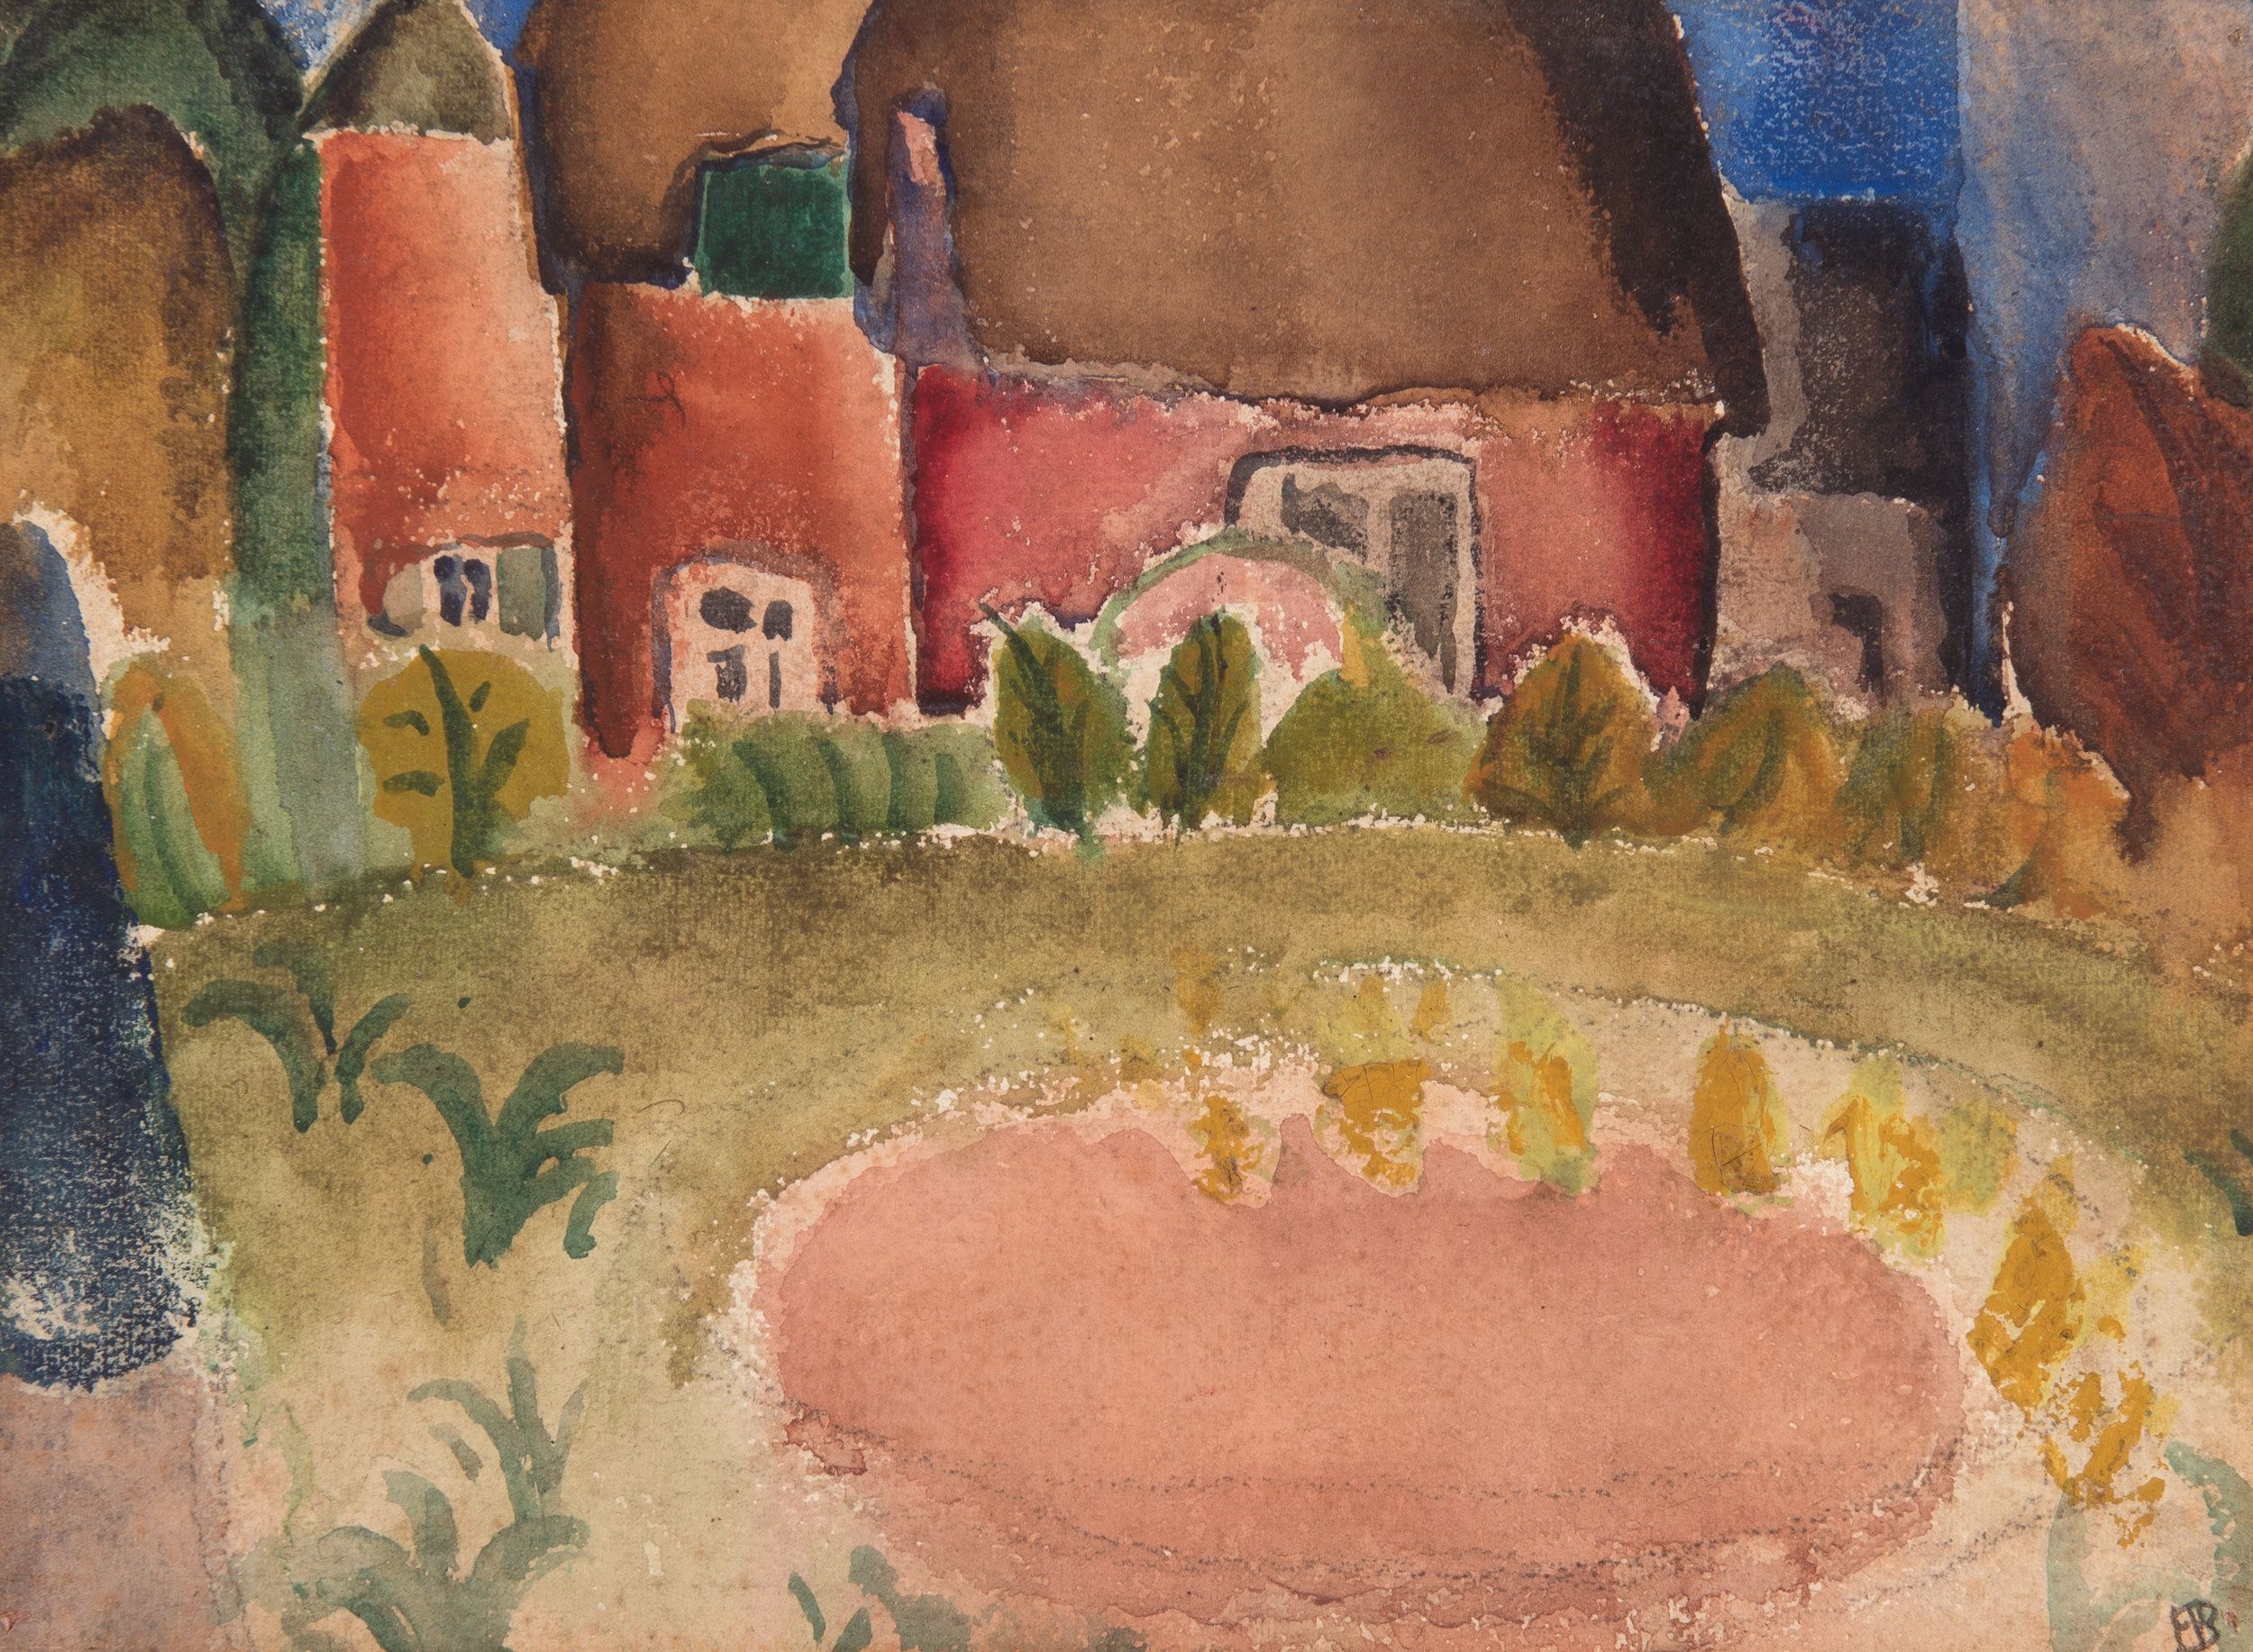 Landscape with pond by Frits van den Berghe, 1920